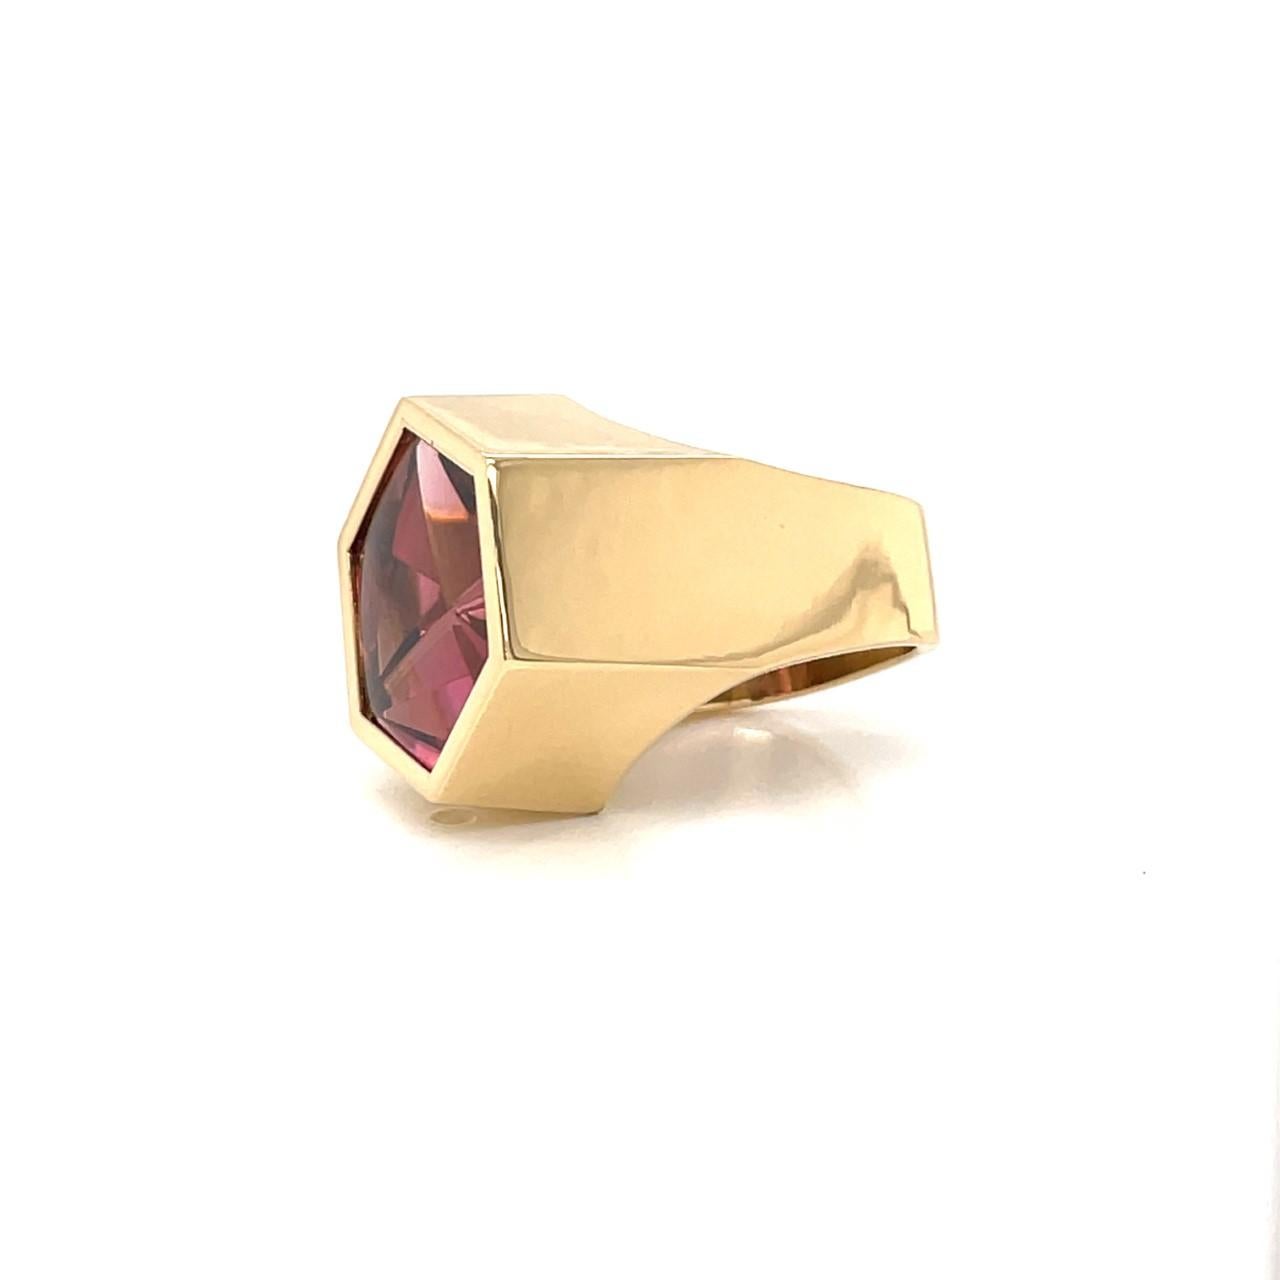 Jean Francois Albert 18k Yellow Gold statement ring with custom cut Pink Tourmaline from Atelier Munsteiner